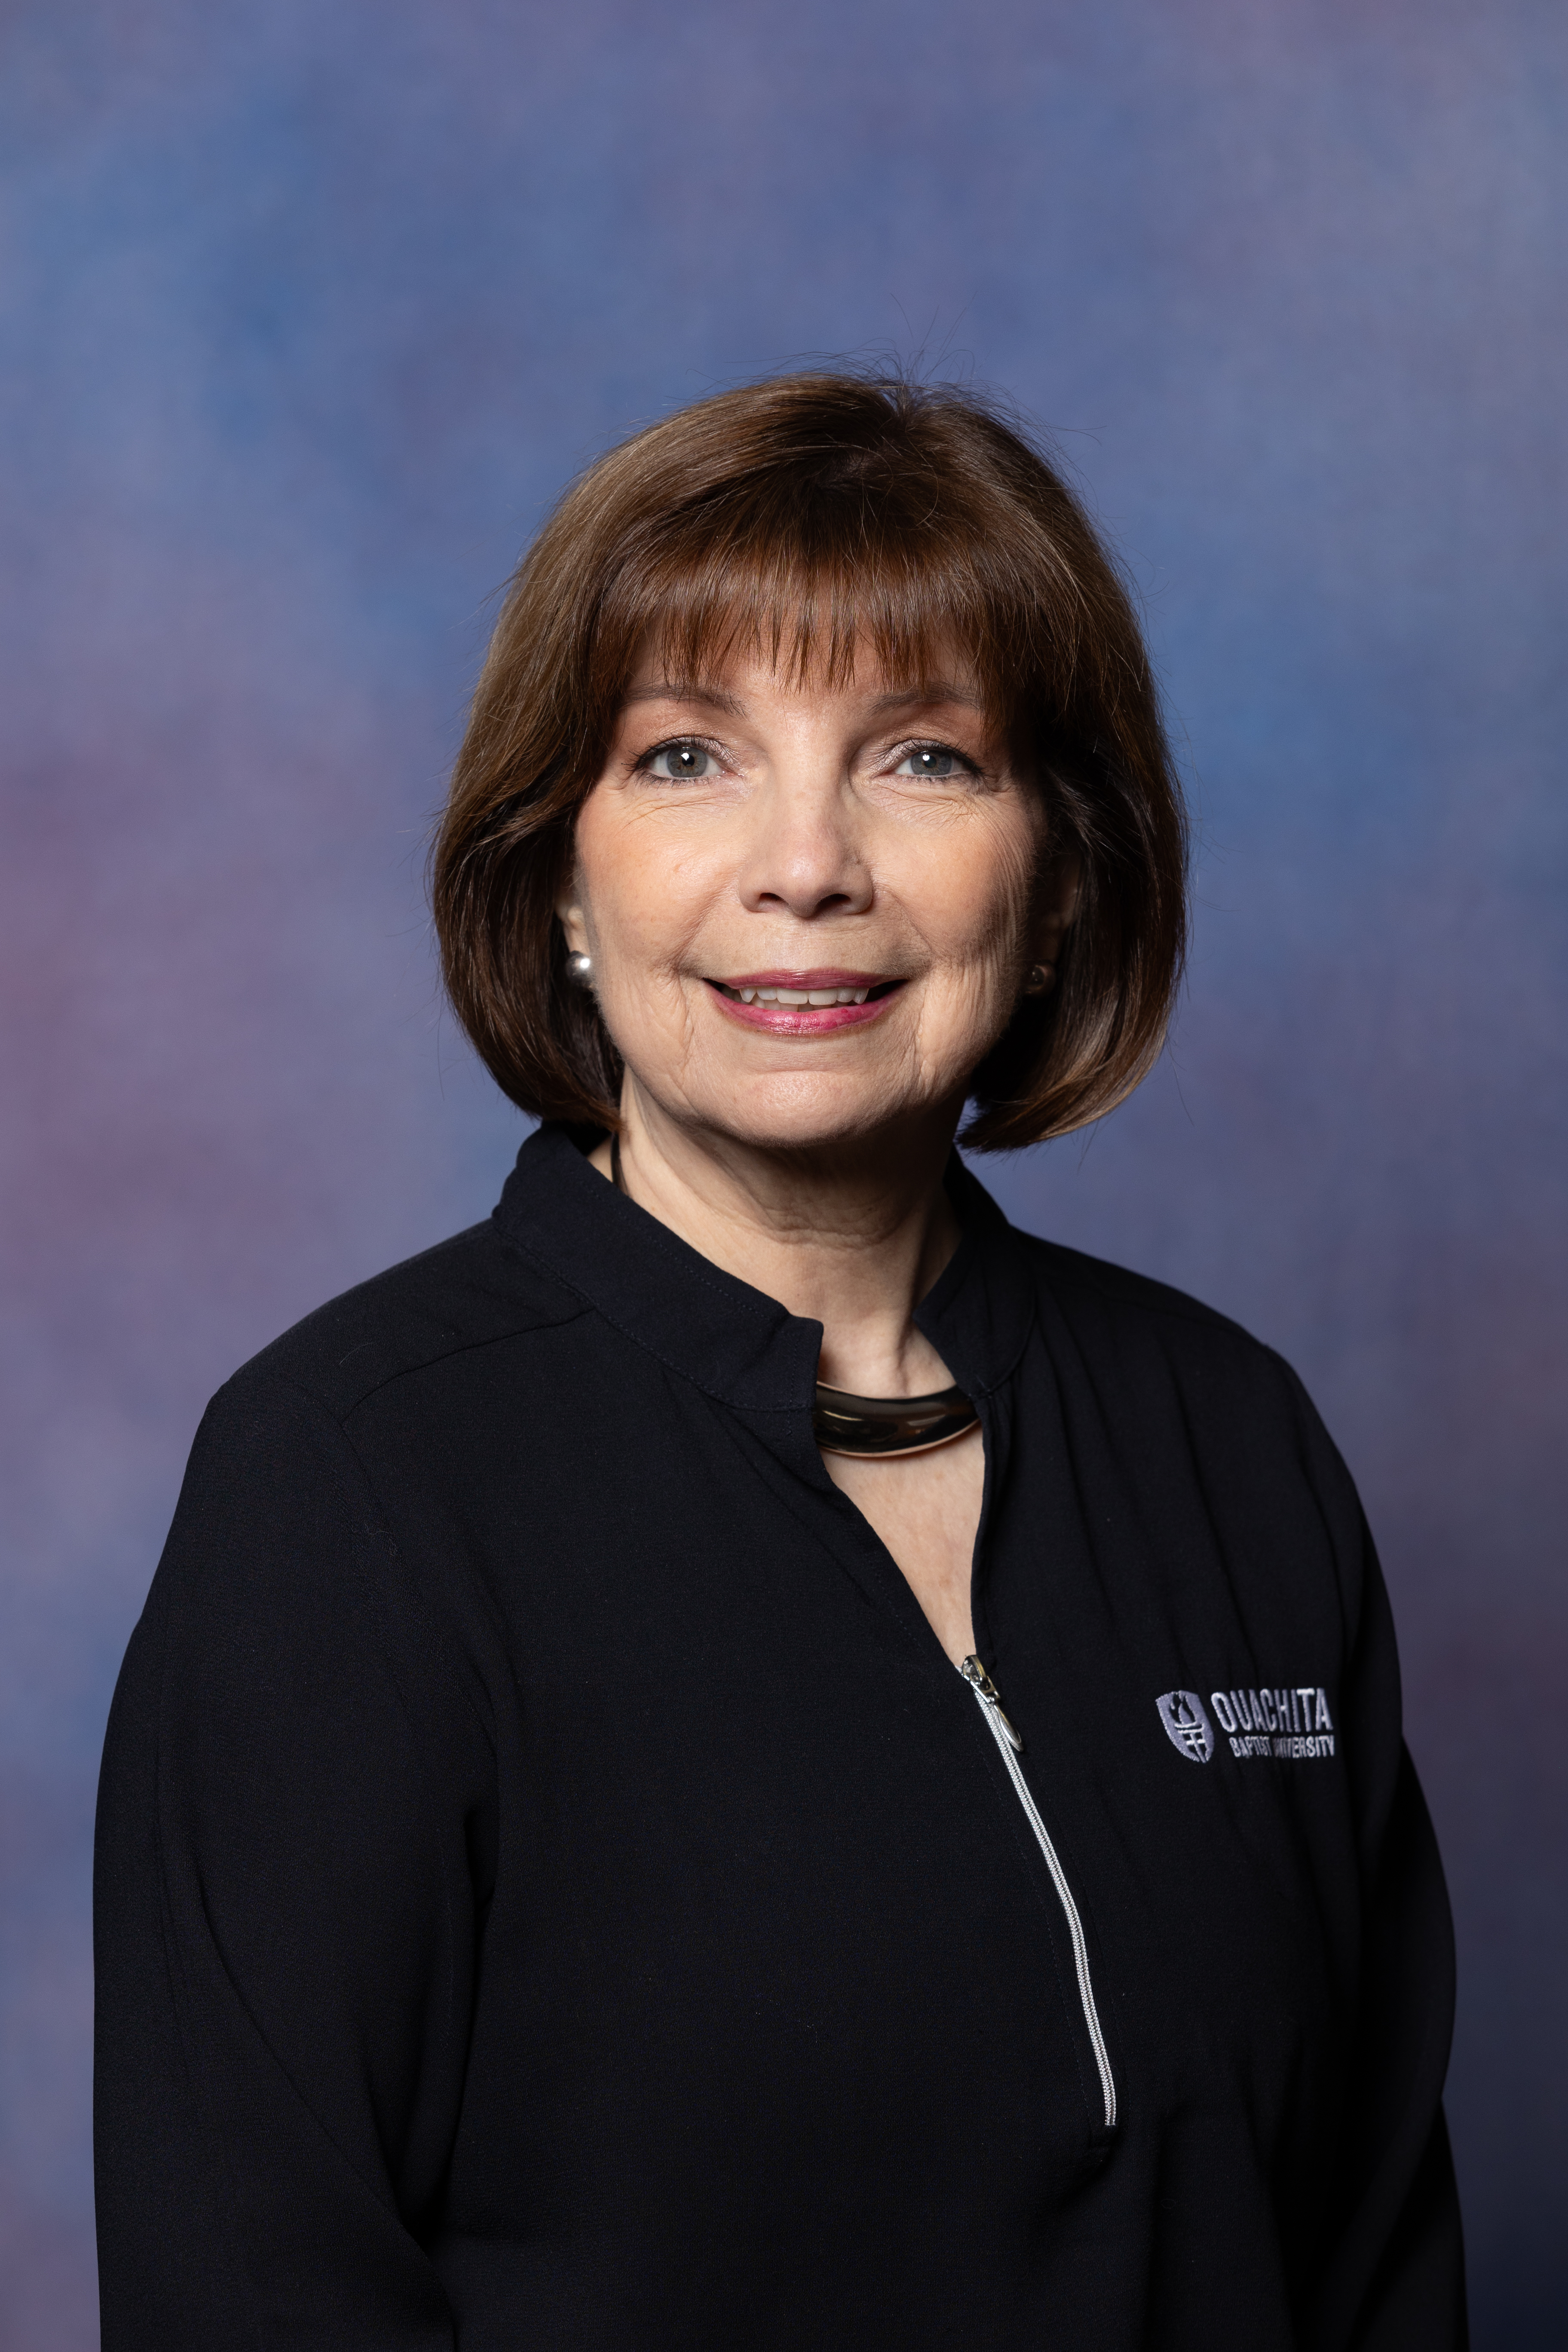 Dr. Kathy Collins